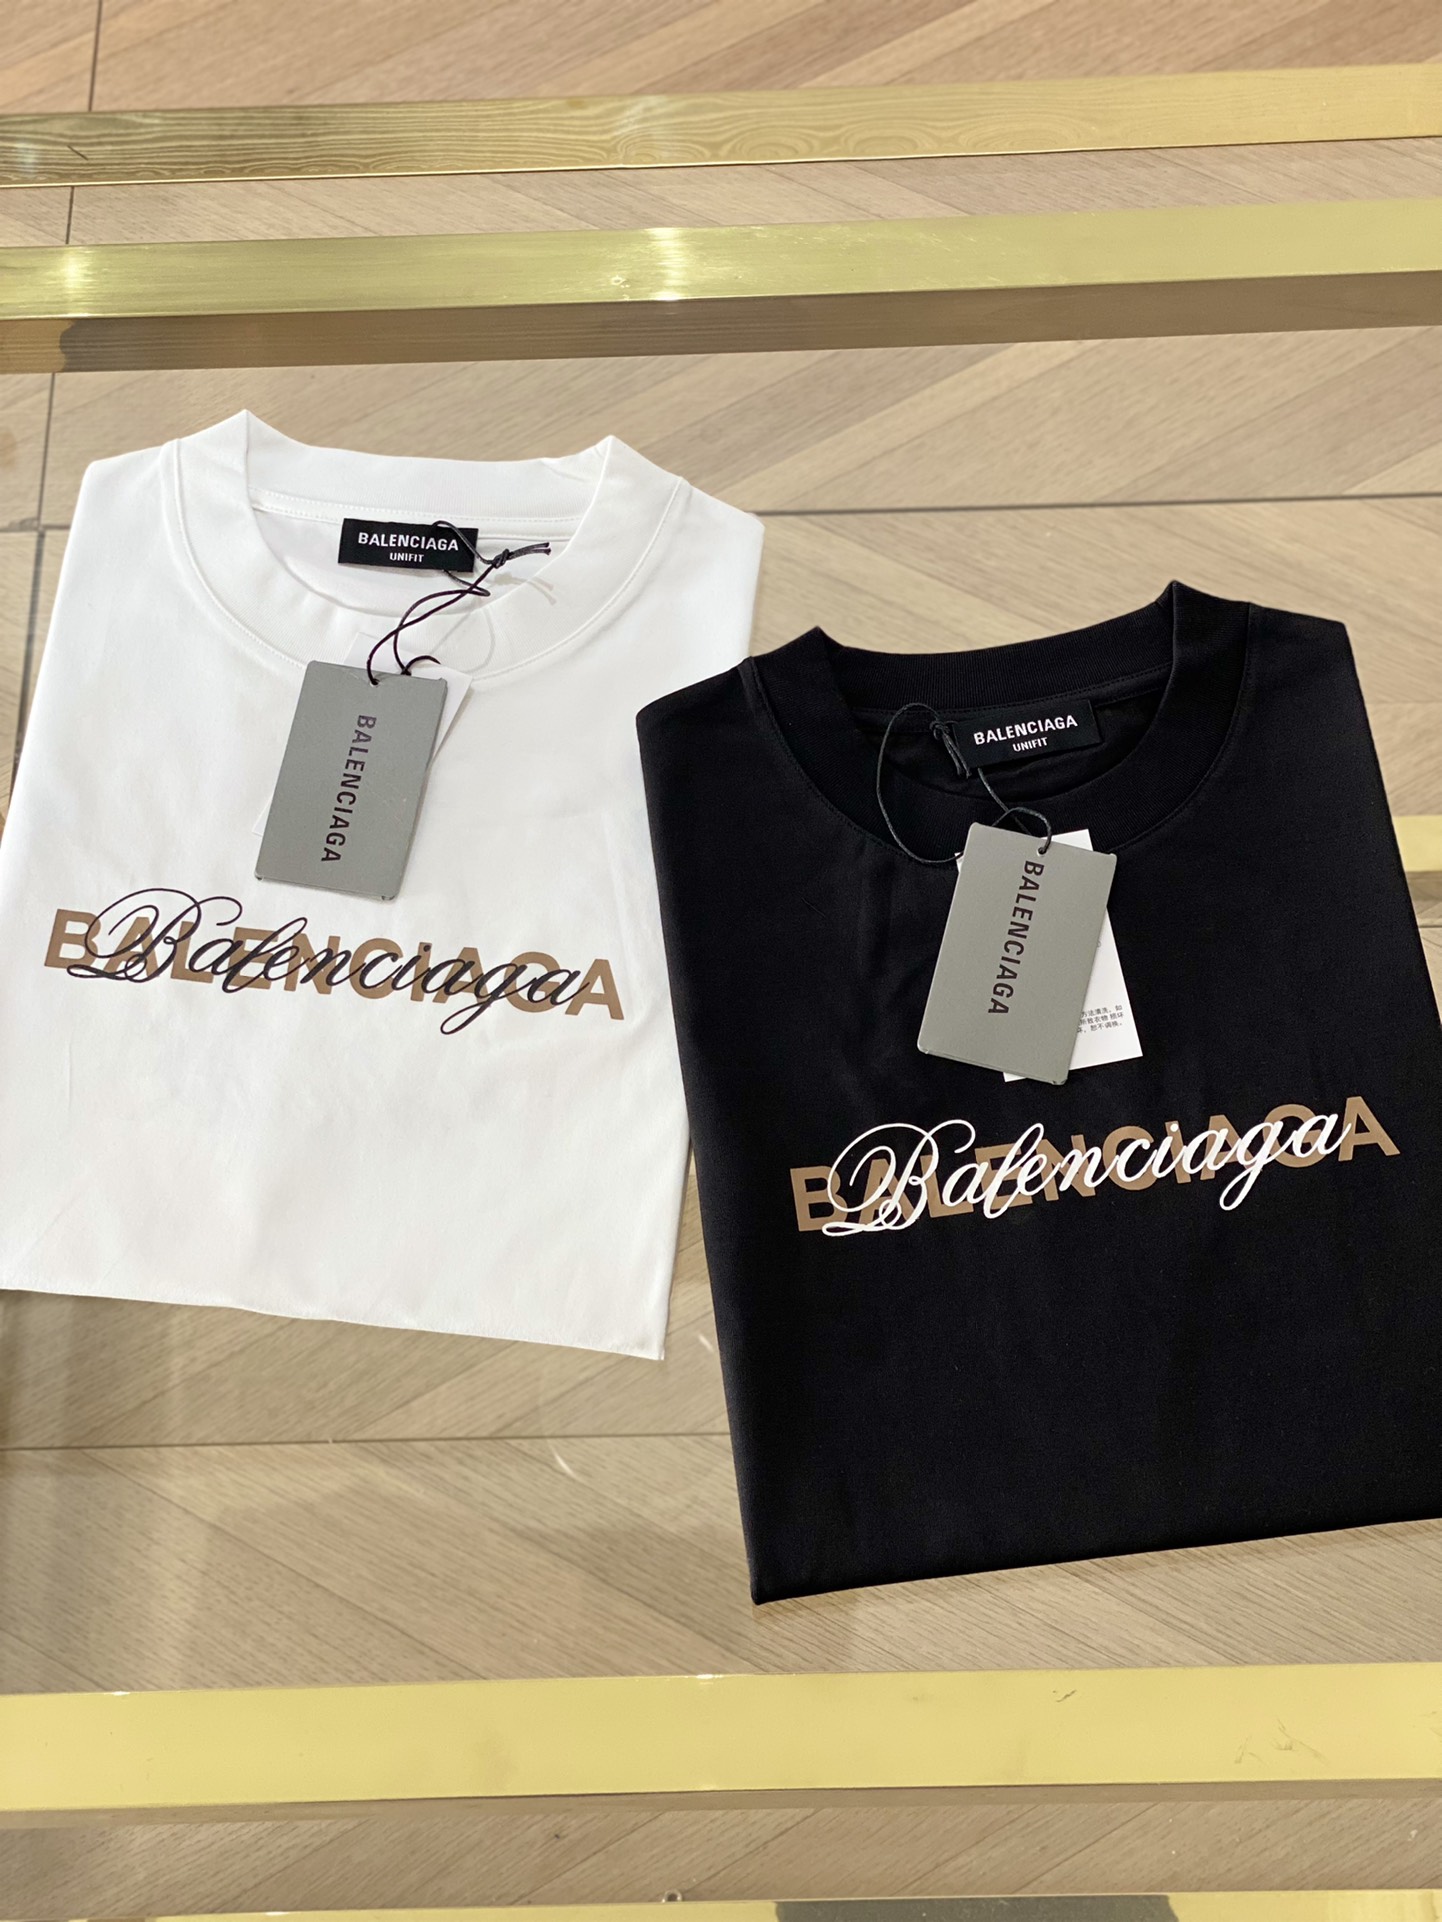 Balenciaga Clothing T-Shirt Embroidery Spring/Summer Collection Fashion Short Sleeve